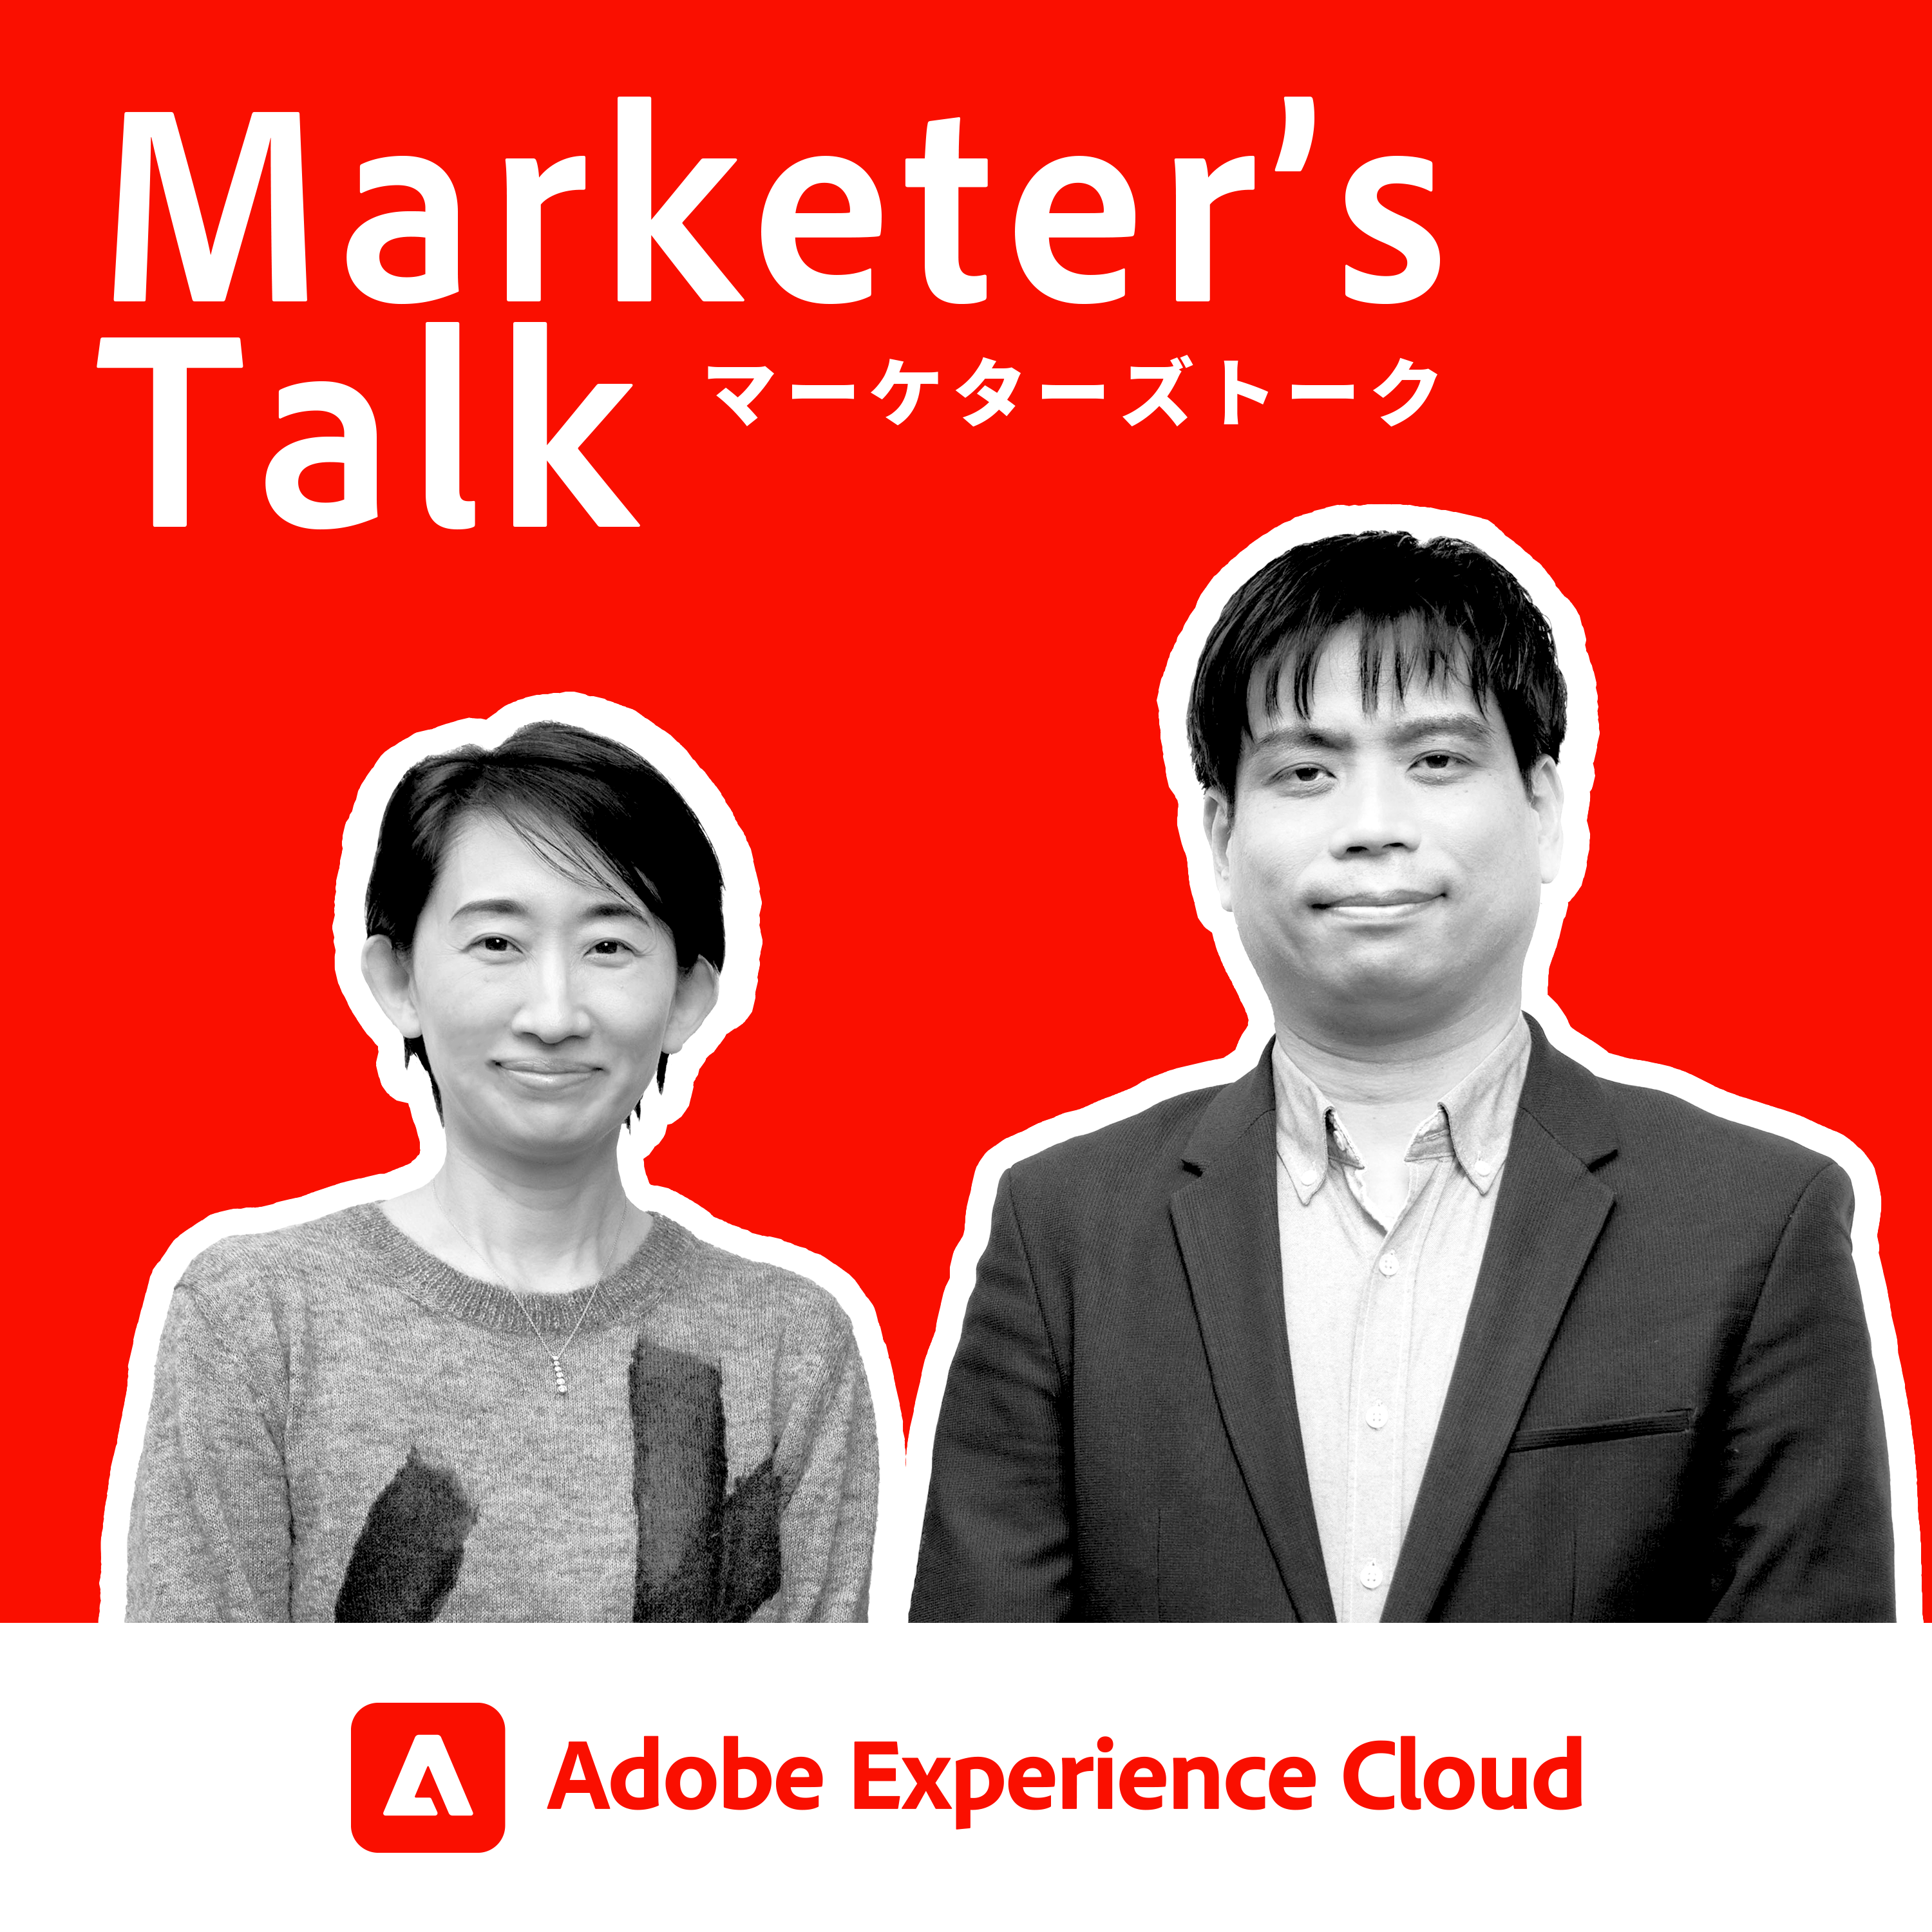 『Marketer’s Talk』#06_01｜ソフトバンク株式会社 山田泰志氏｜B2Bビジネスにおけるマーケティング担当者のあり方とは？ - グローバルで通用するマーケティング人材に必要な能力や経験とは